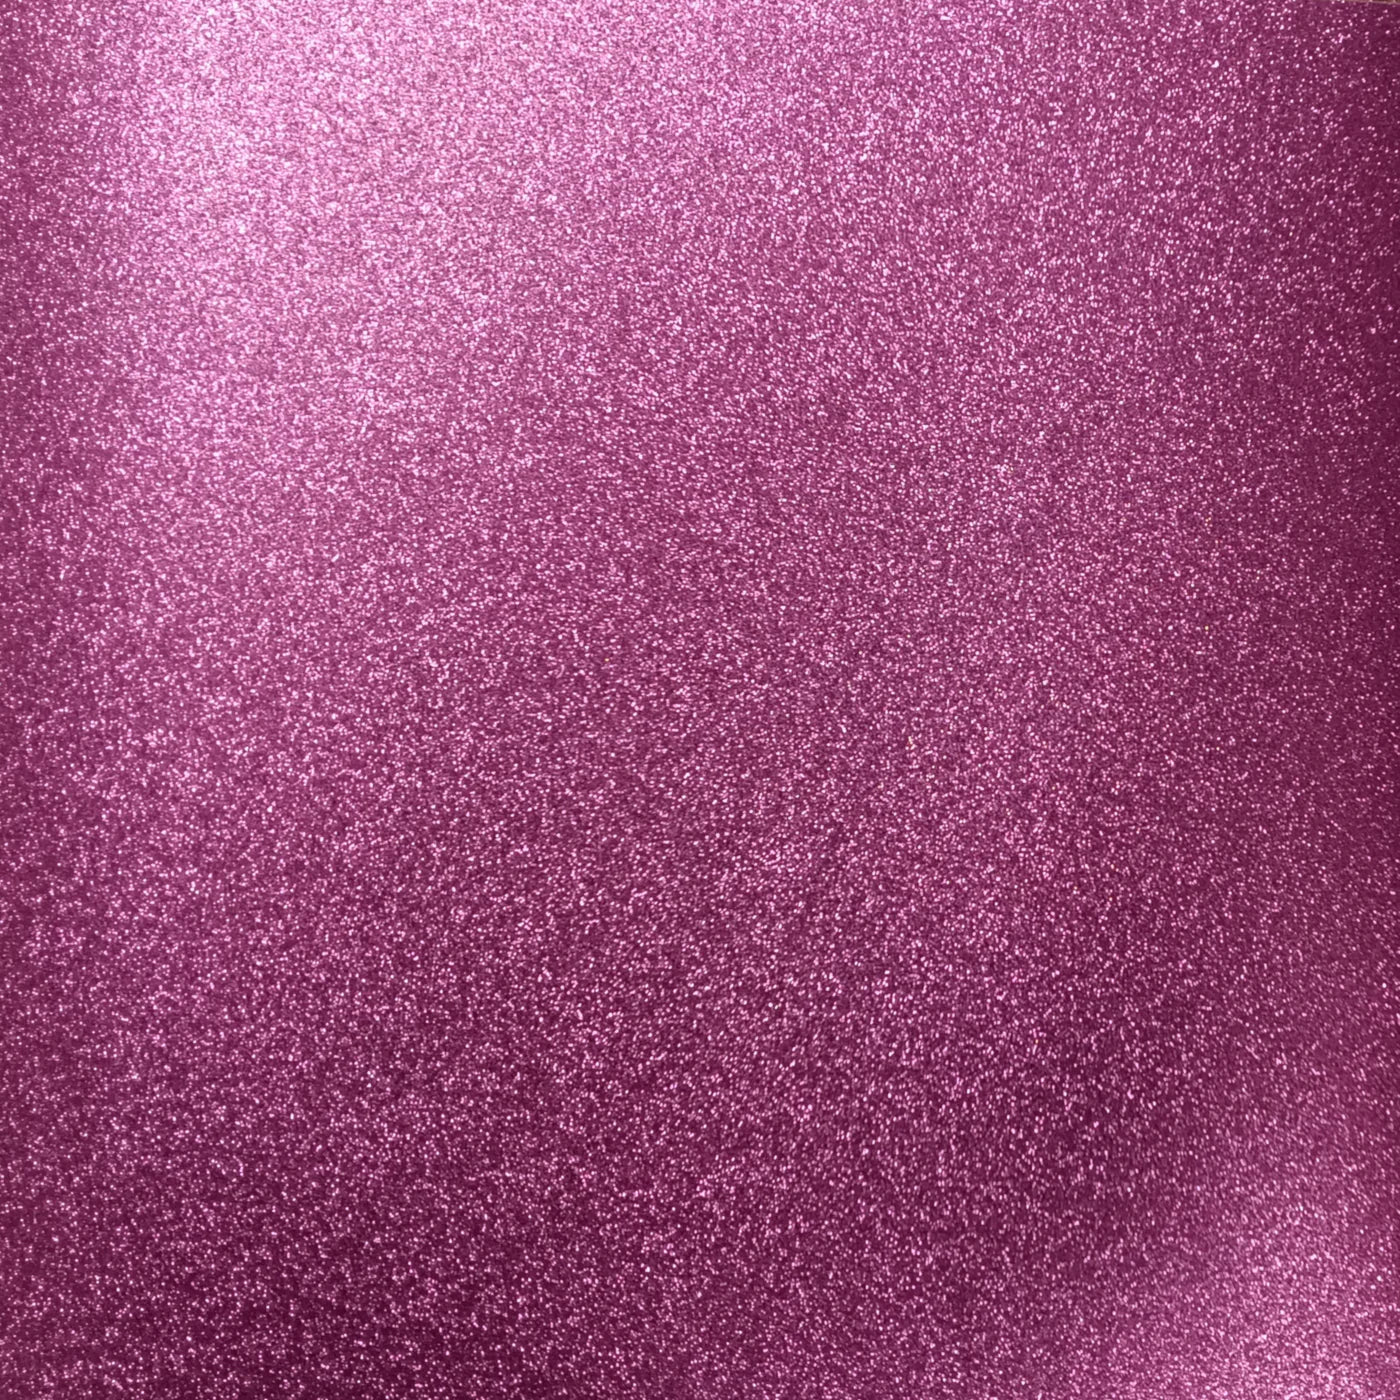 Core'dinations - Cartulina con purpurina